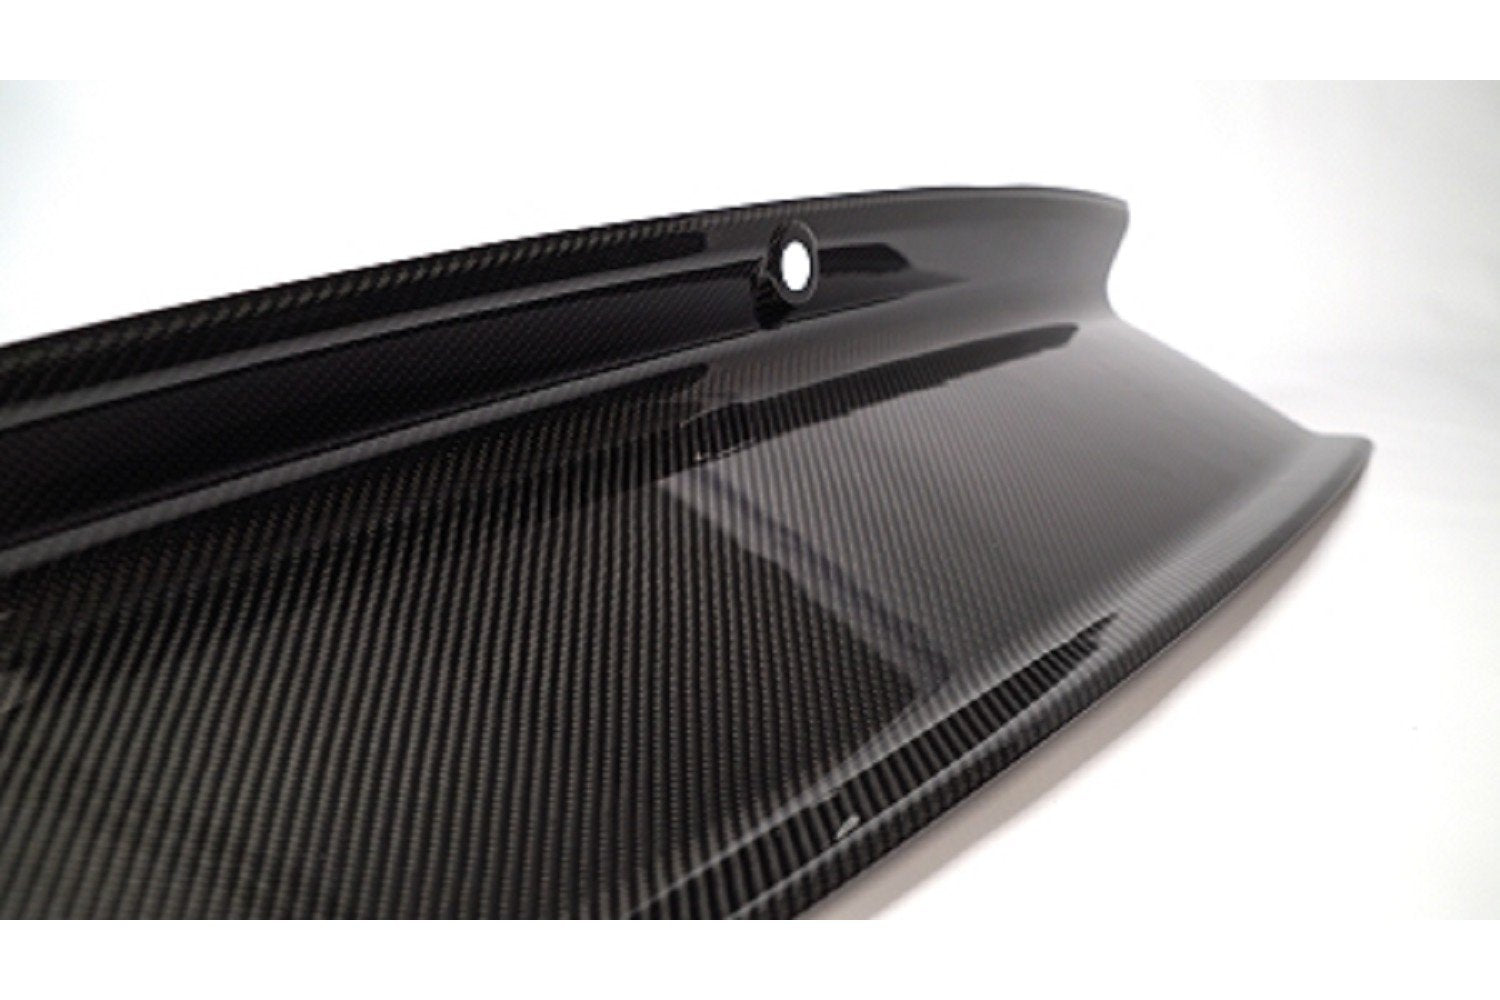 Pokrywa tylnego pokładu Anderson Composites Carbon do S550 Mustang